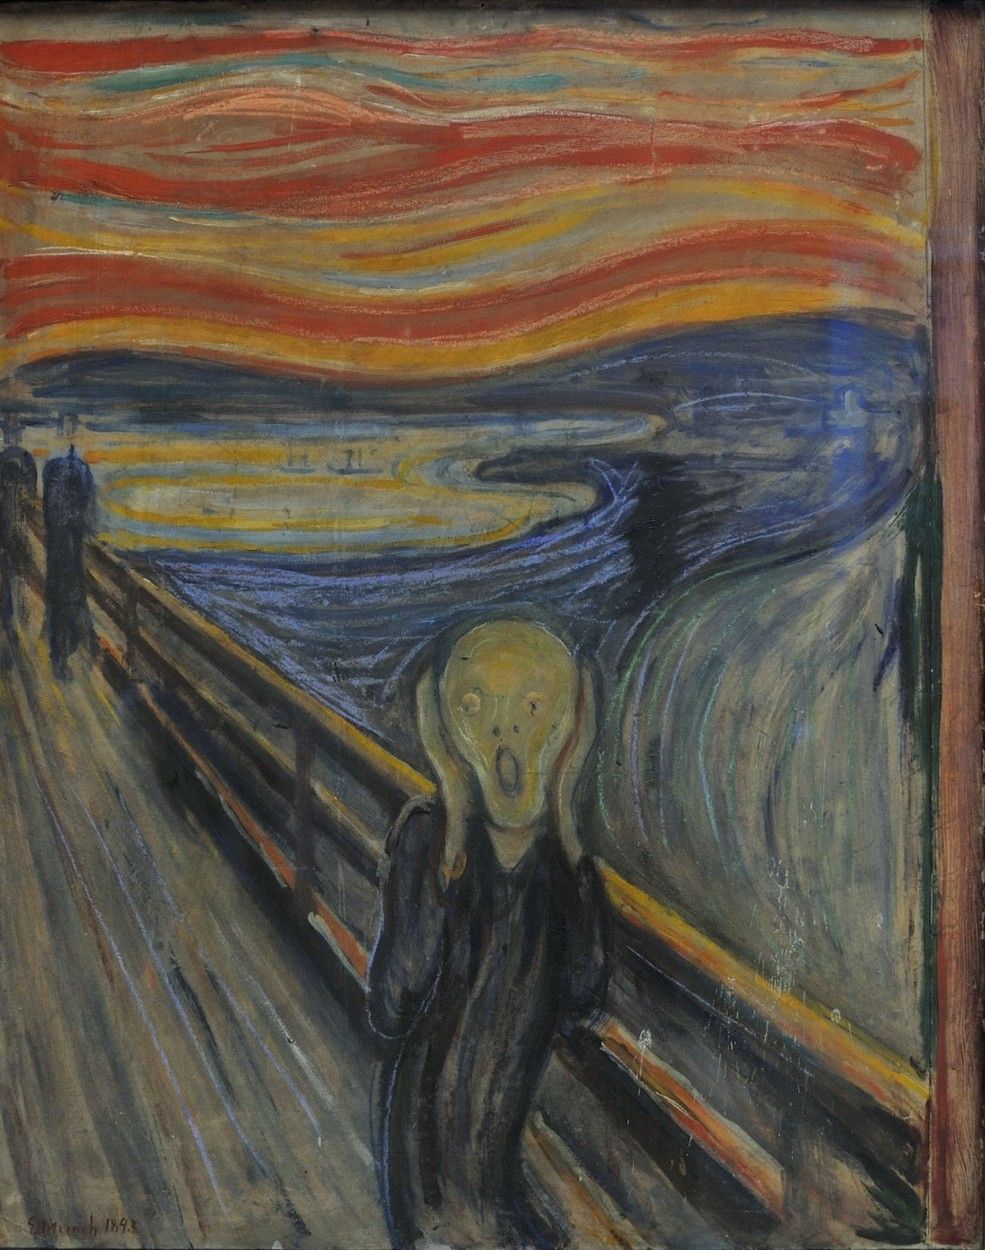 Obraz s názvem Křik od Edvarda Muncha.